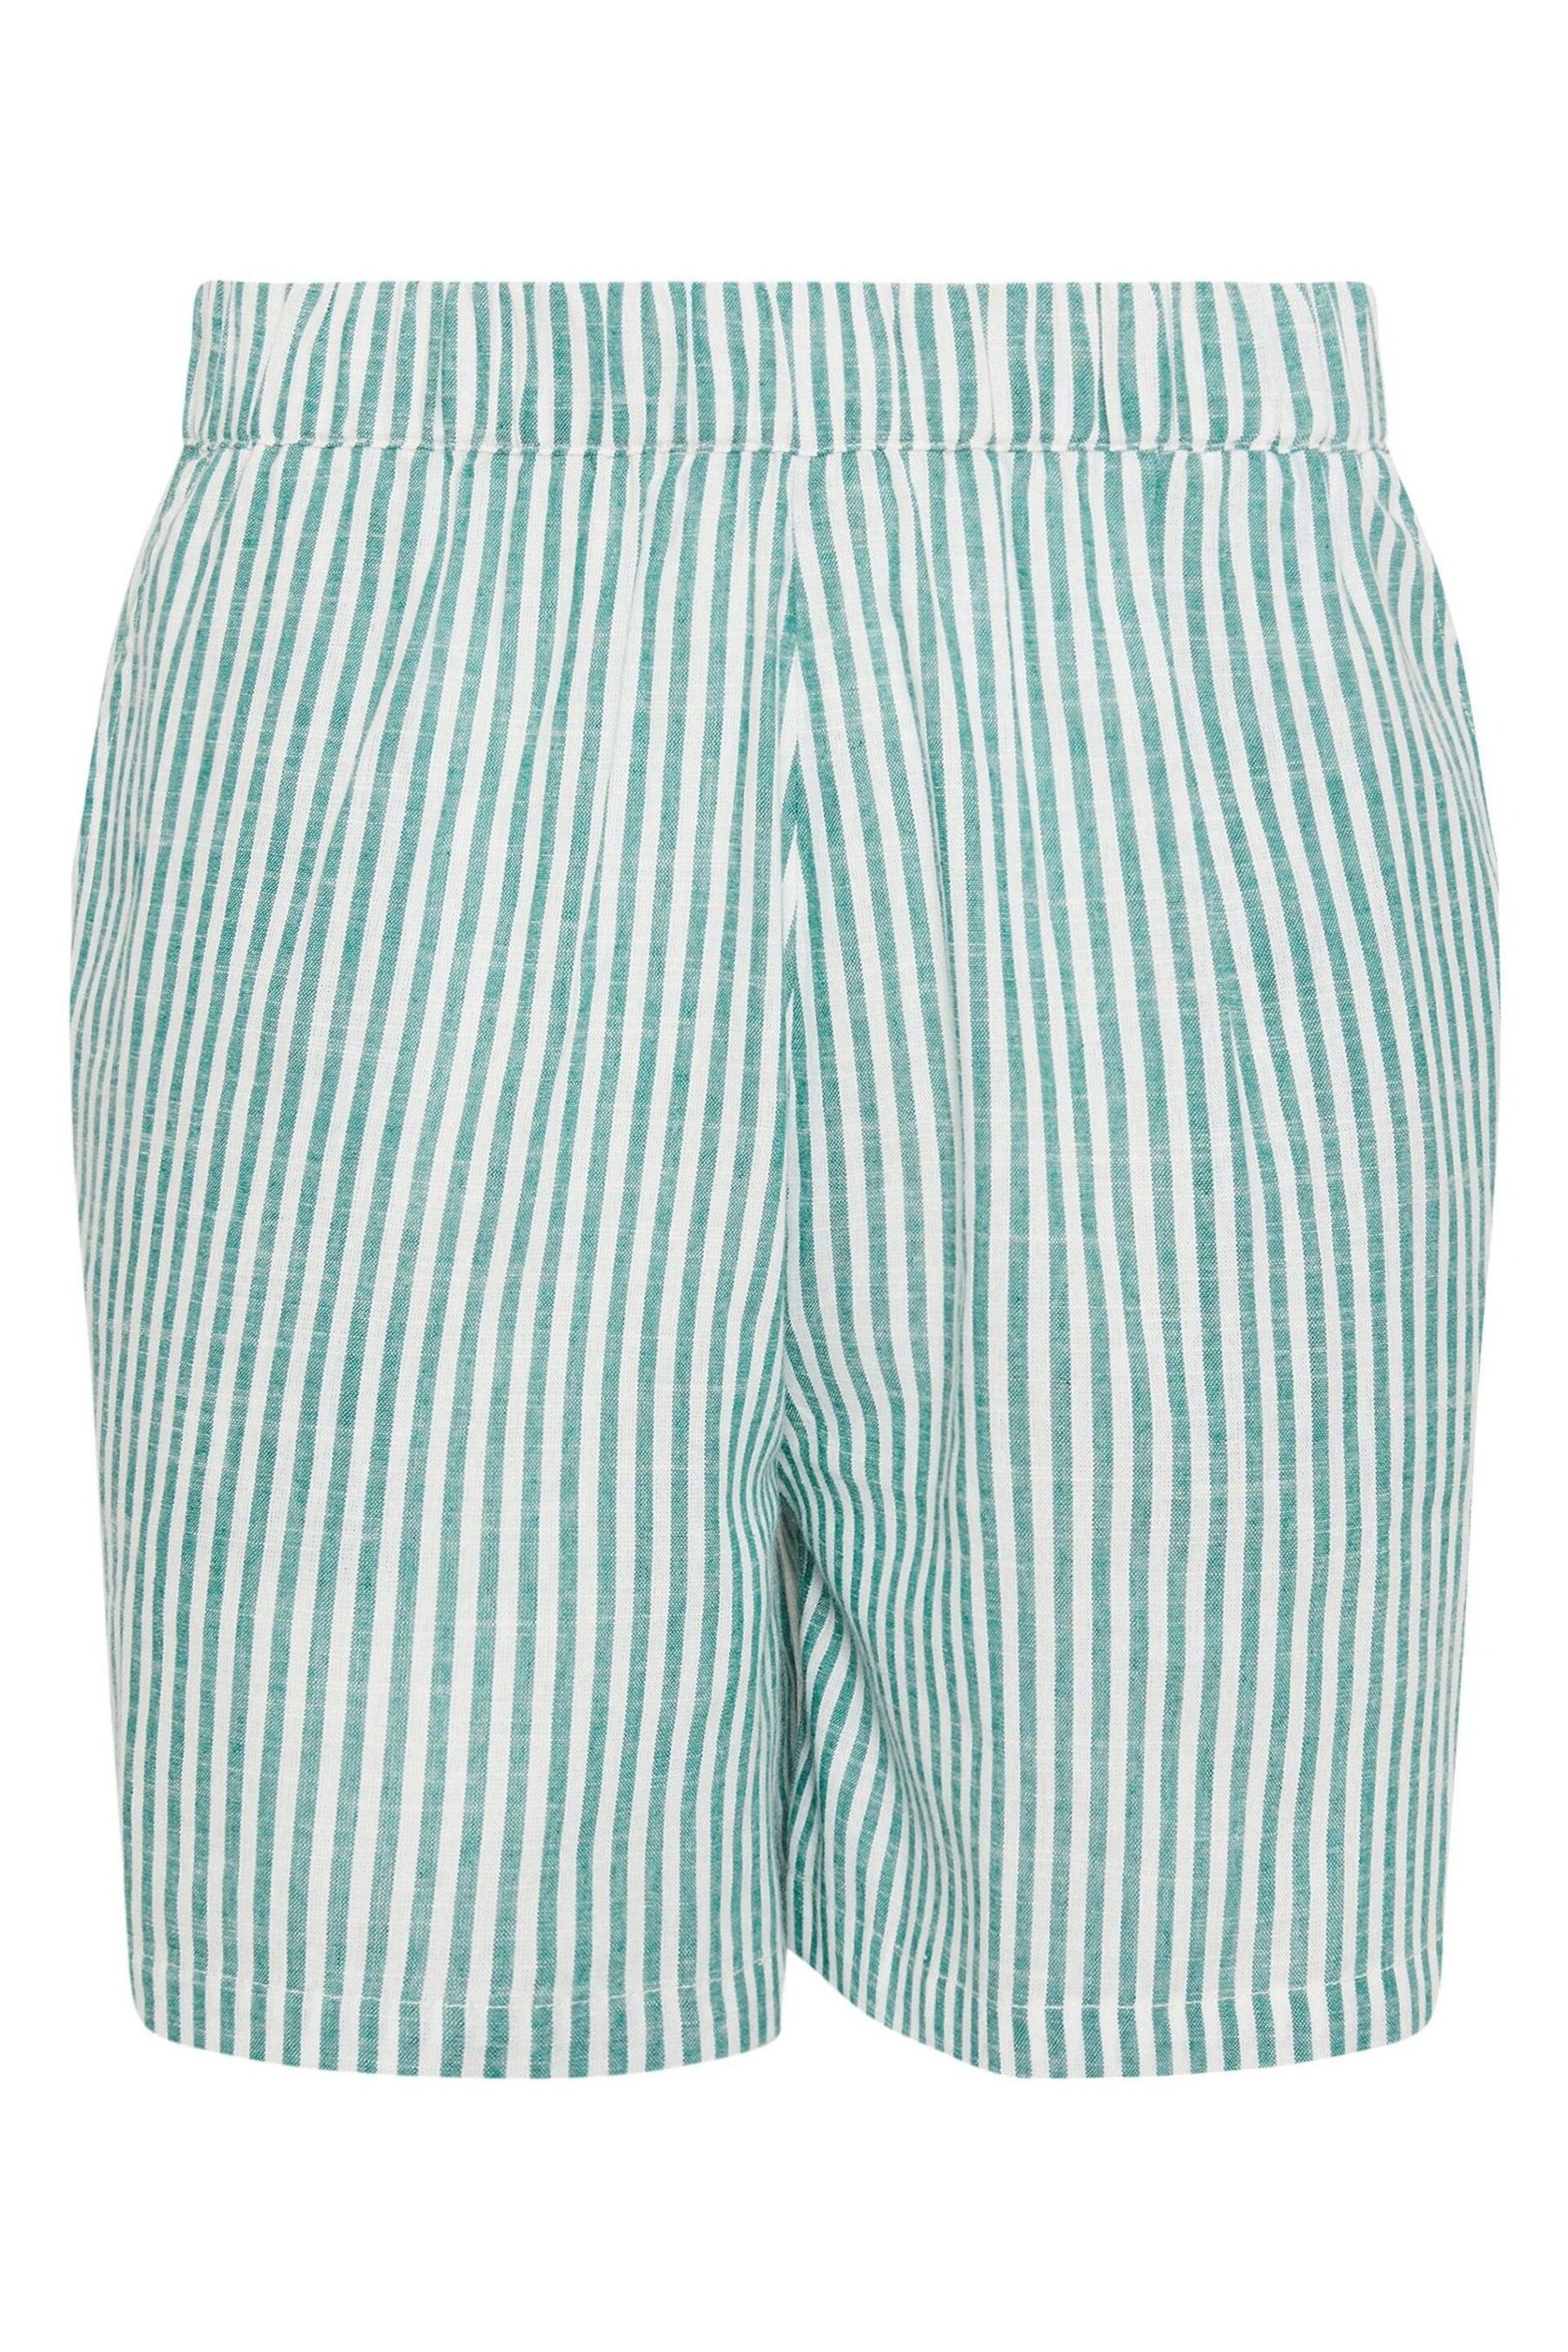 Long Tall Sally Green Stripe Elasticated Waist Shorts - Image 6 of 6